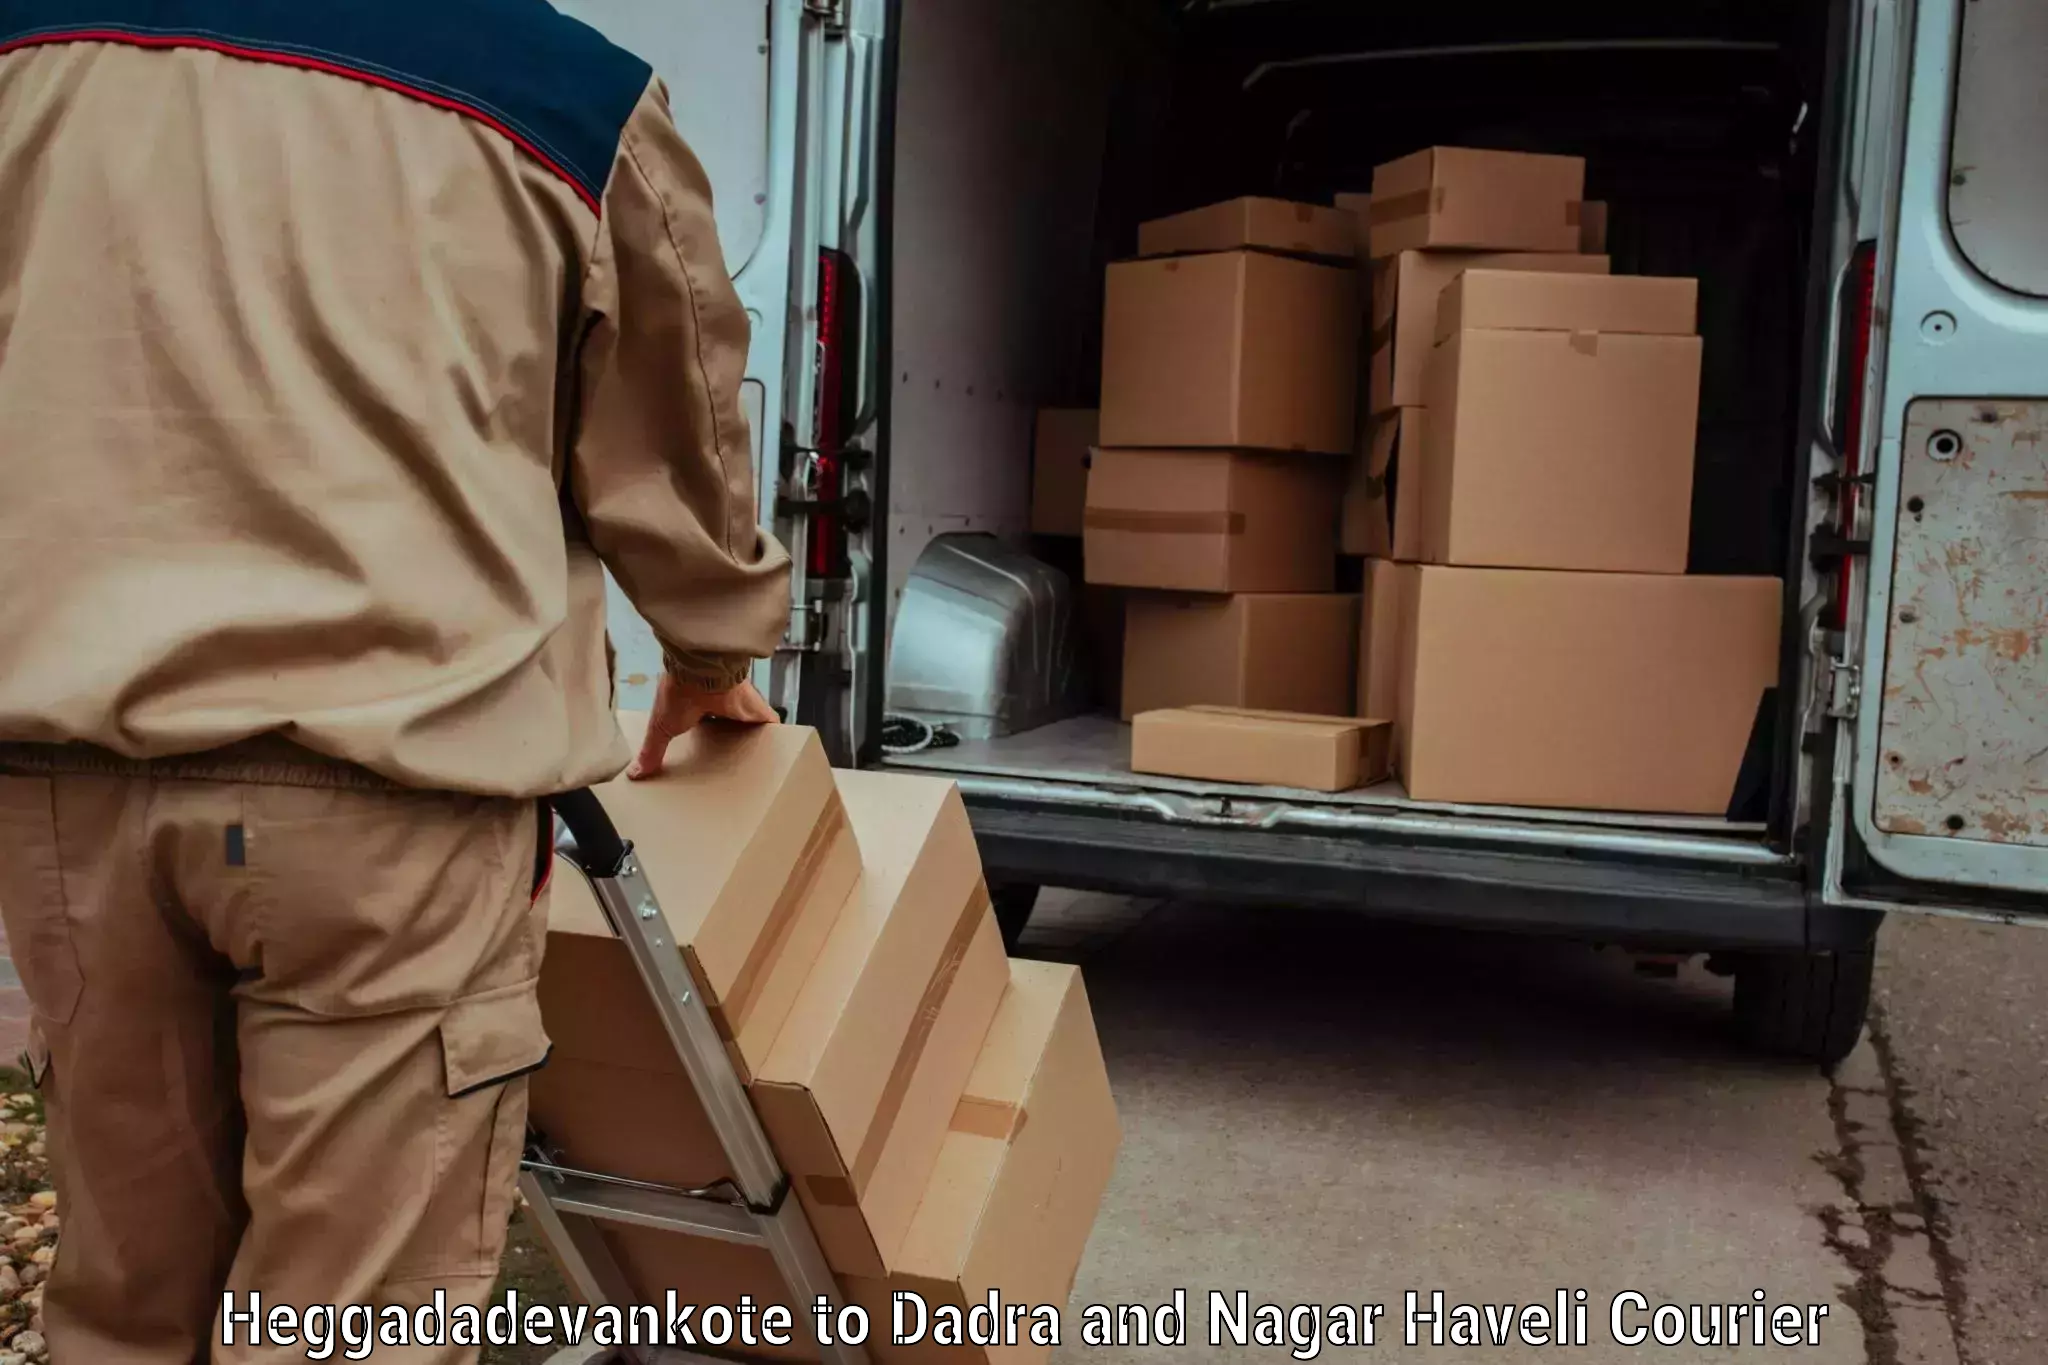 Multi-national courier services Heggadadevankote to Silvassa